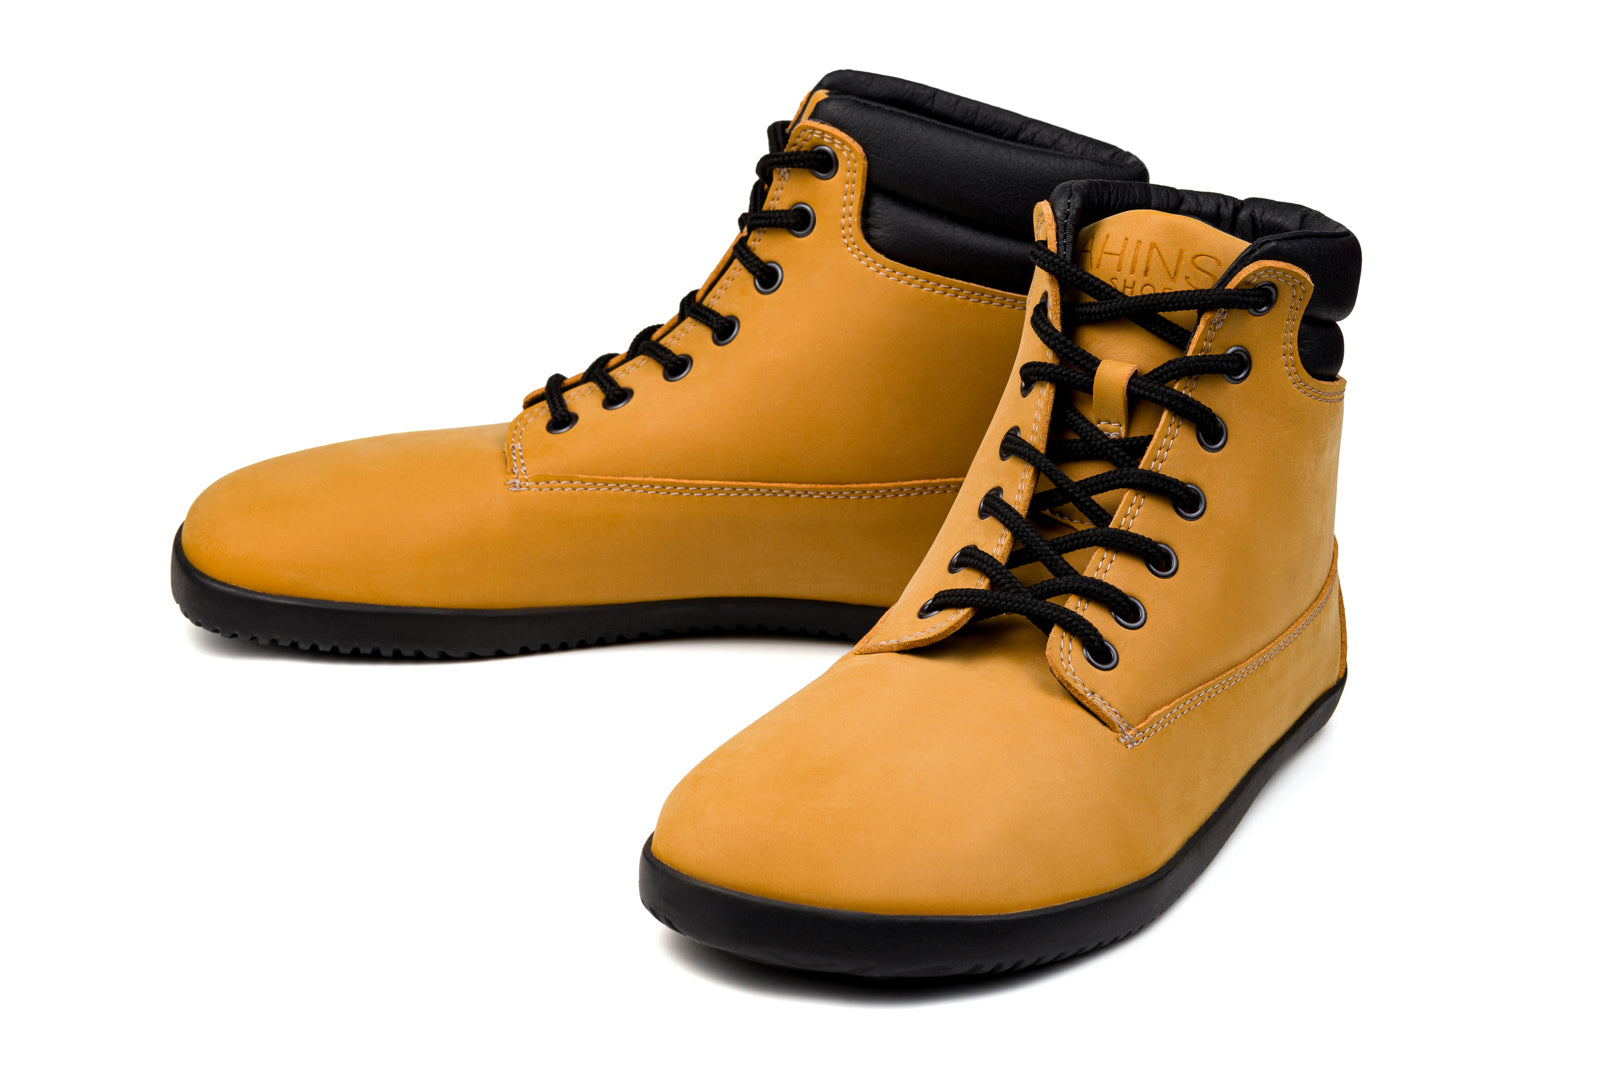 Ahinsa Shuma Boots: A Pinnacle of Ethical Footwear Design